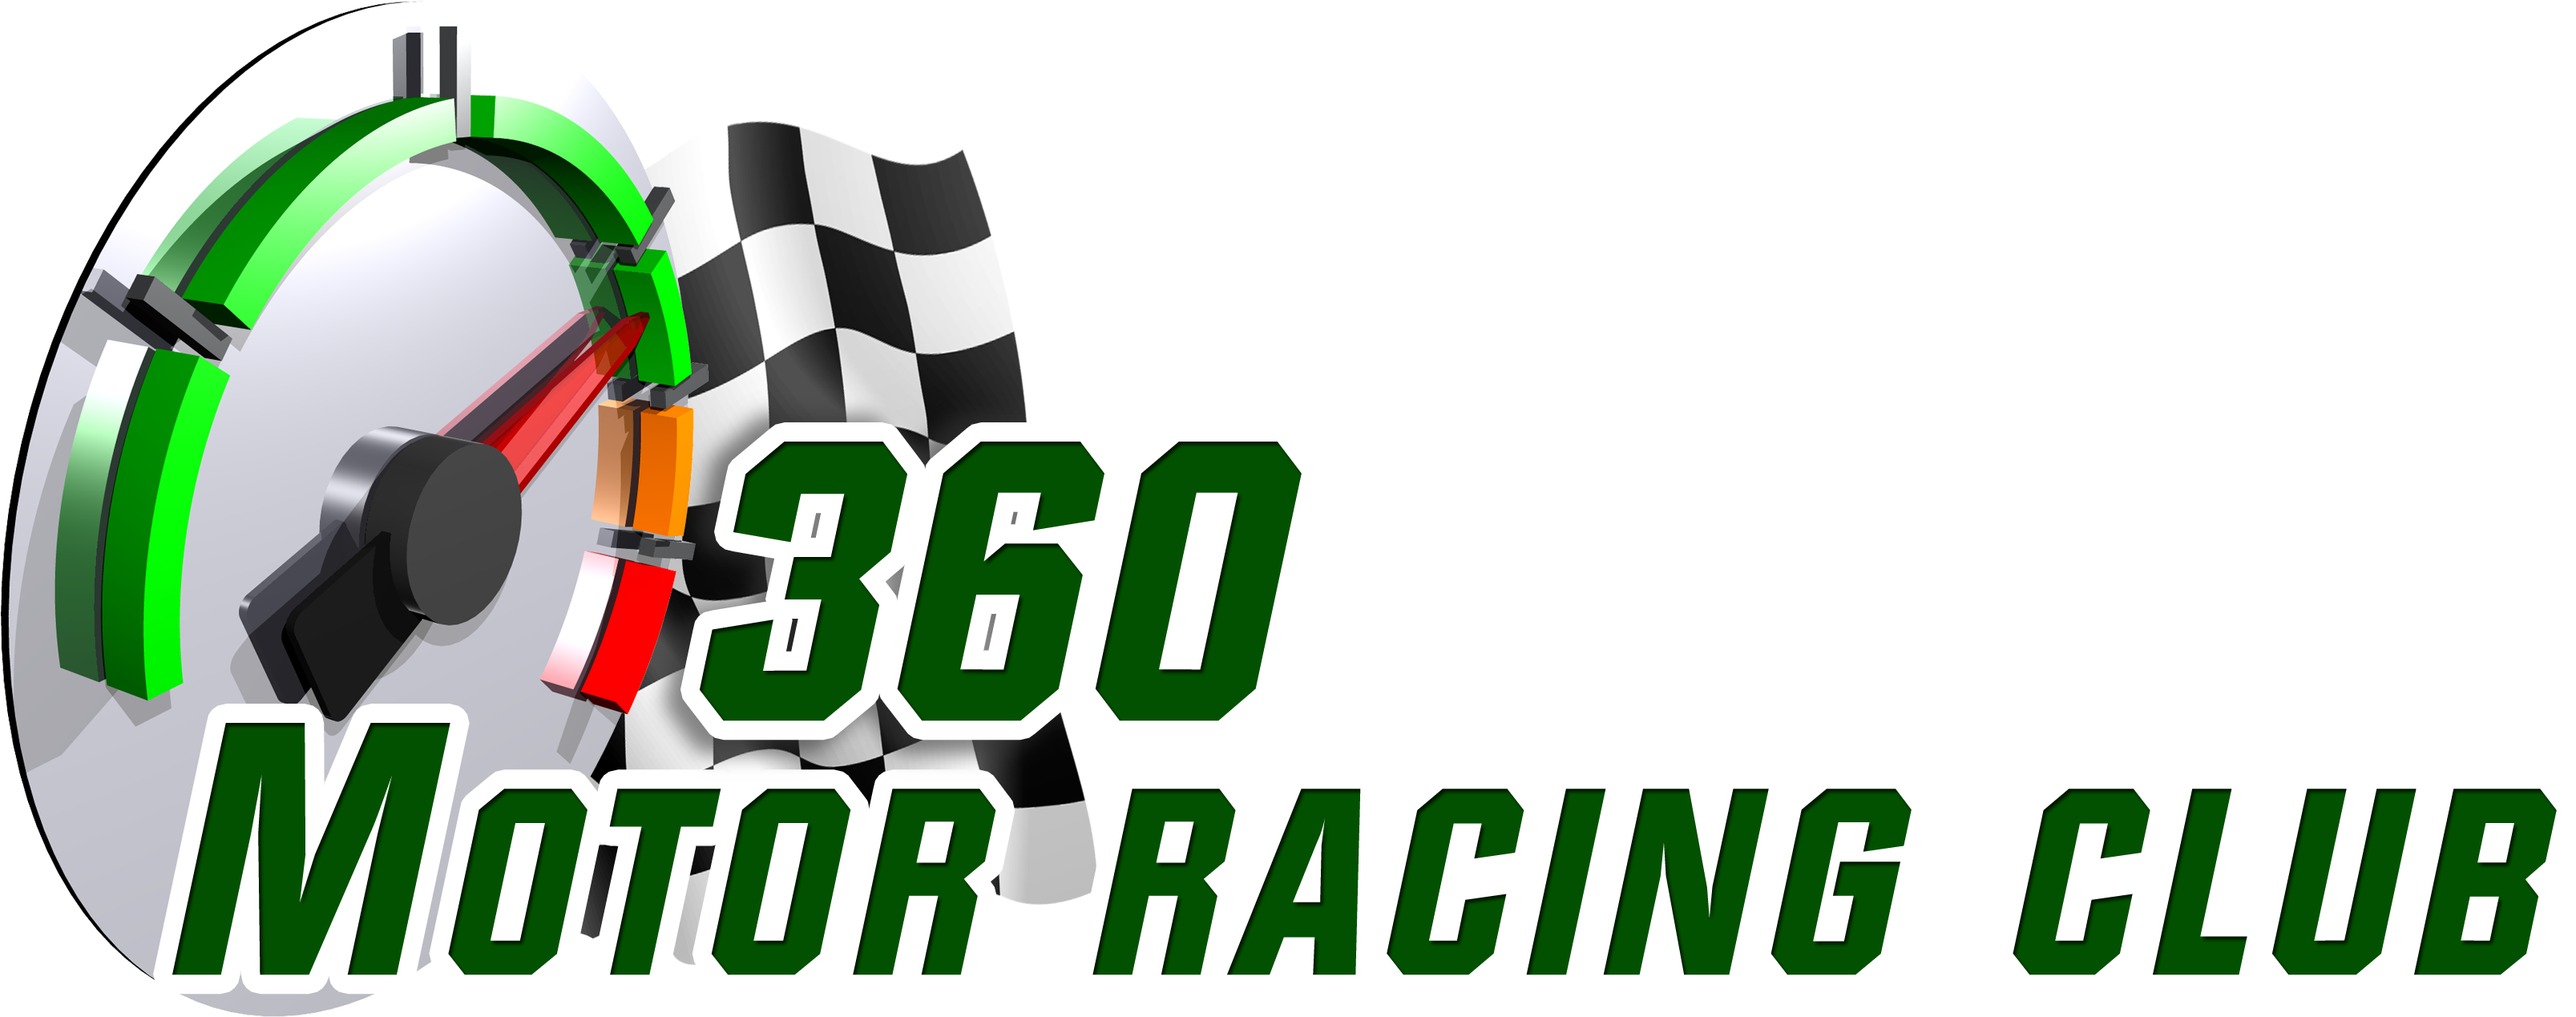 Motor Race Logo Png (3400x1300), Png Download